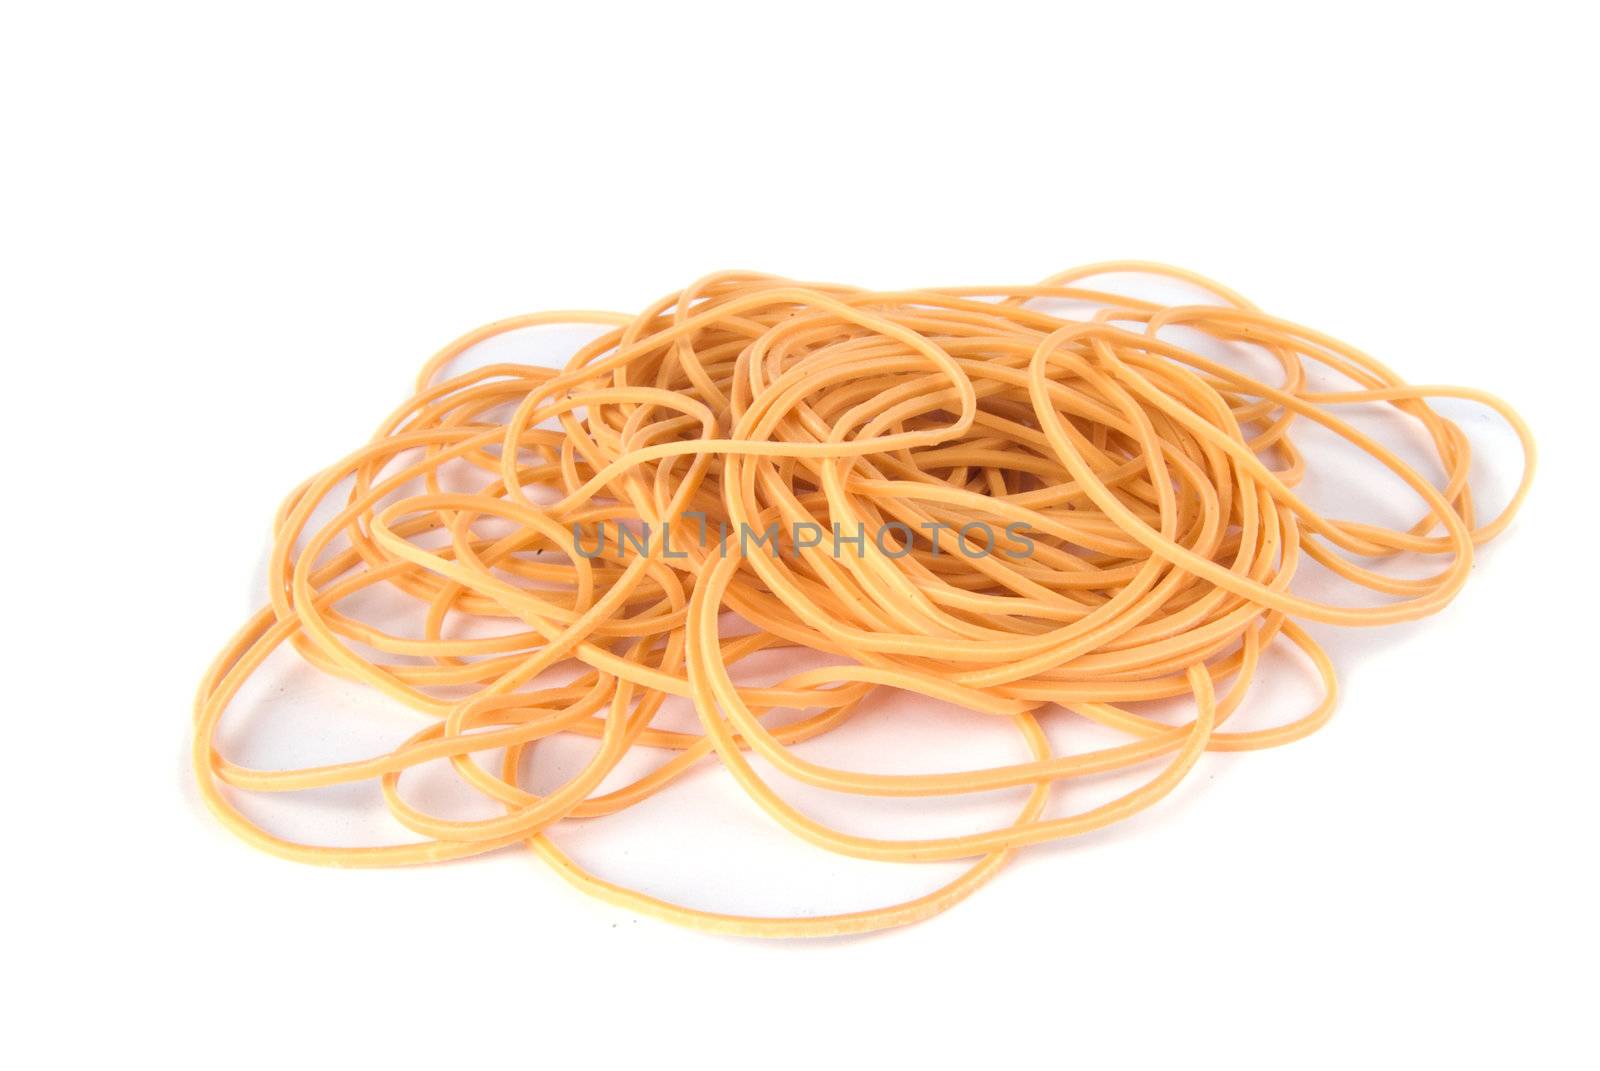 Pile of plain rubber bands